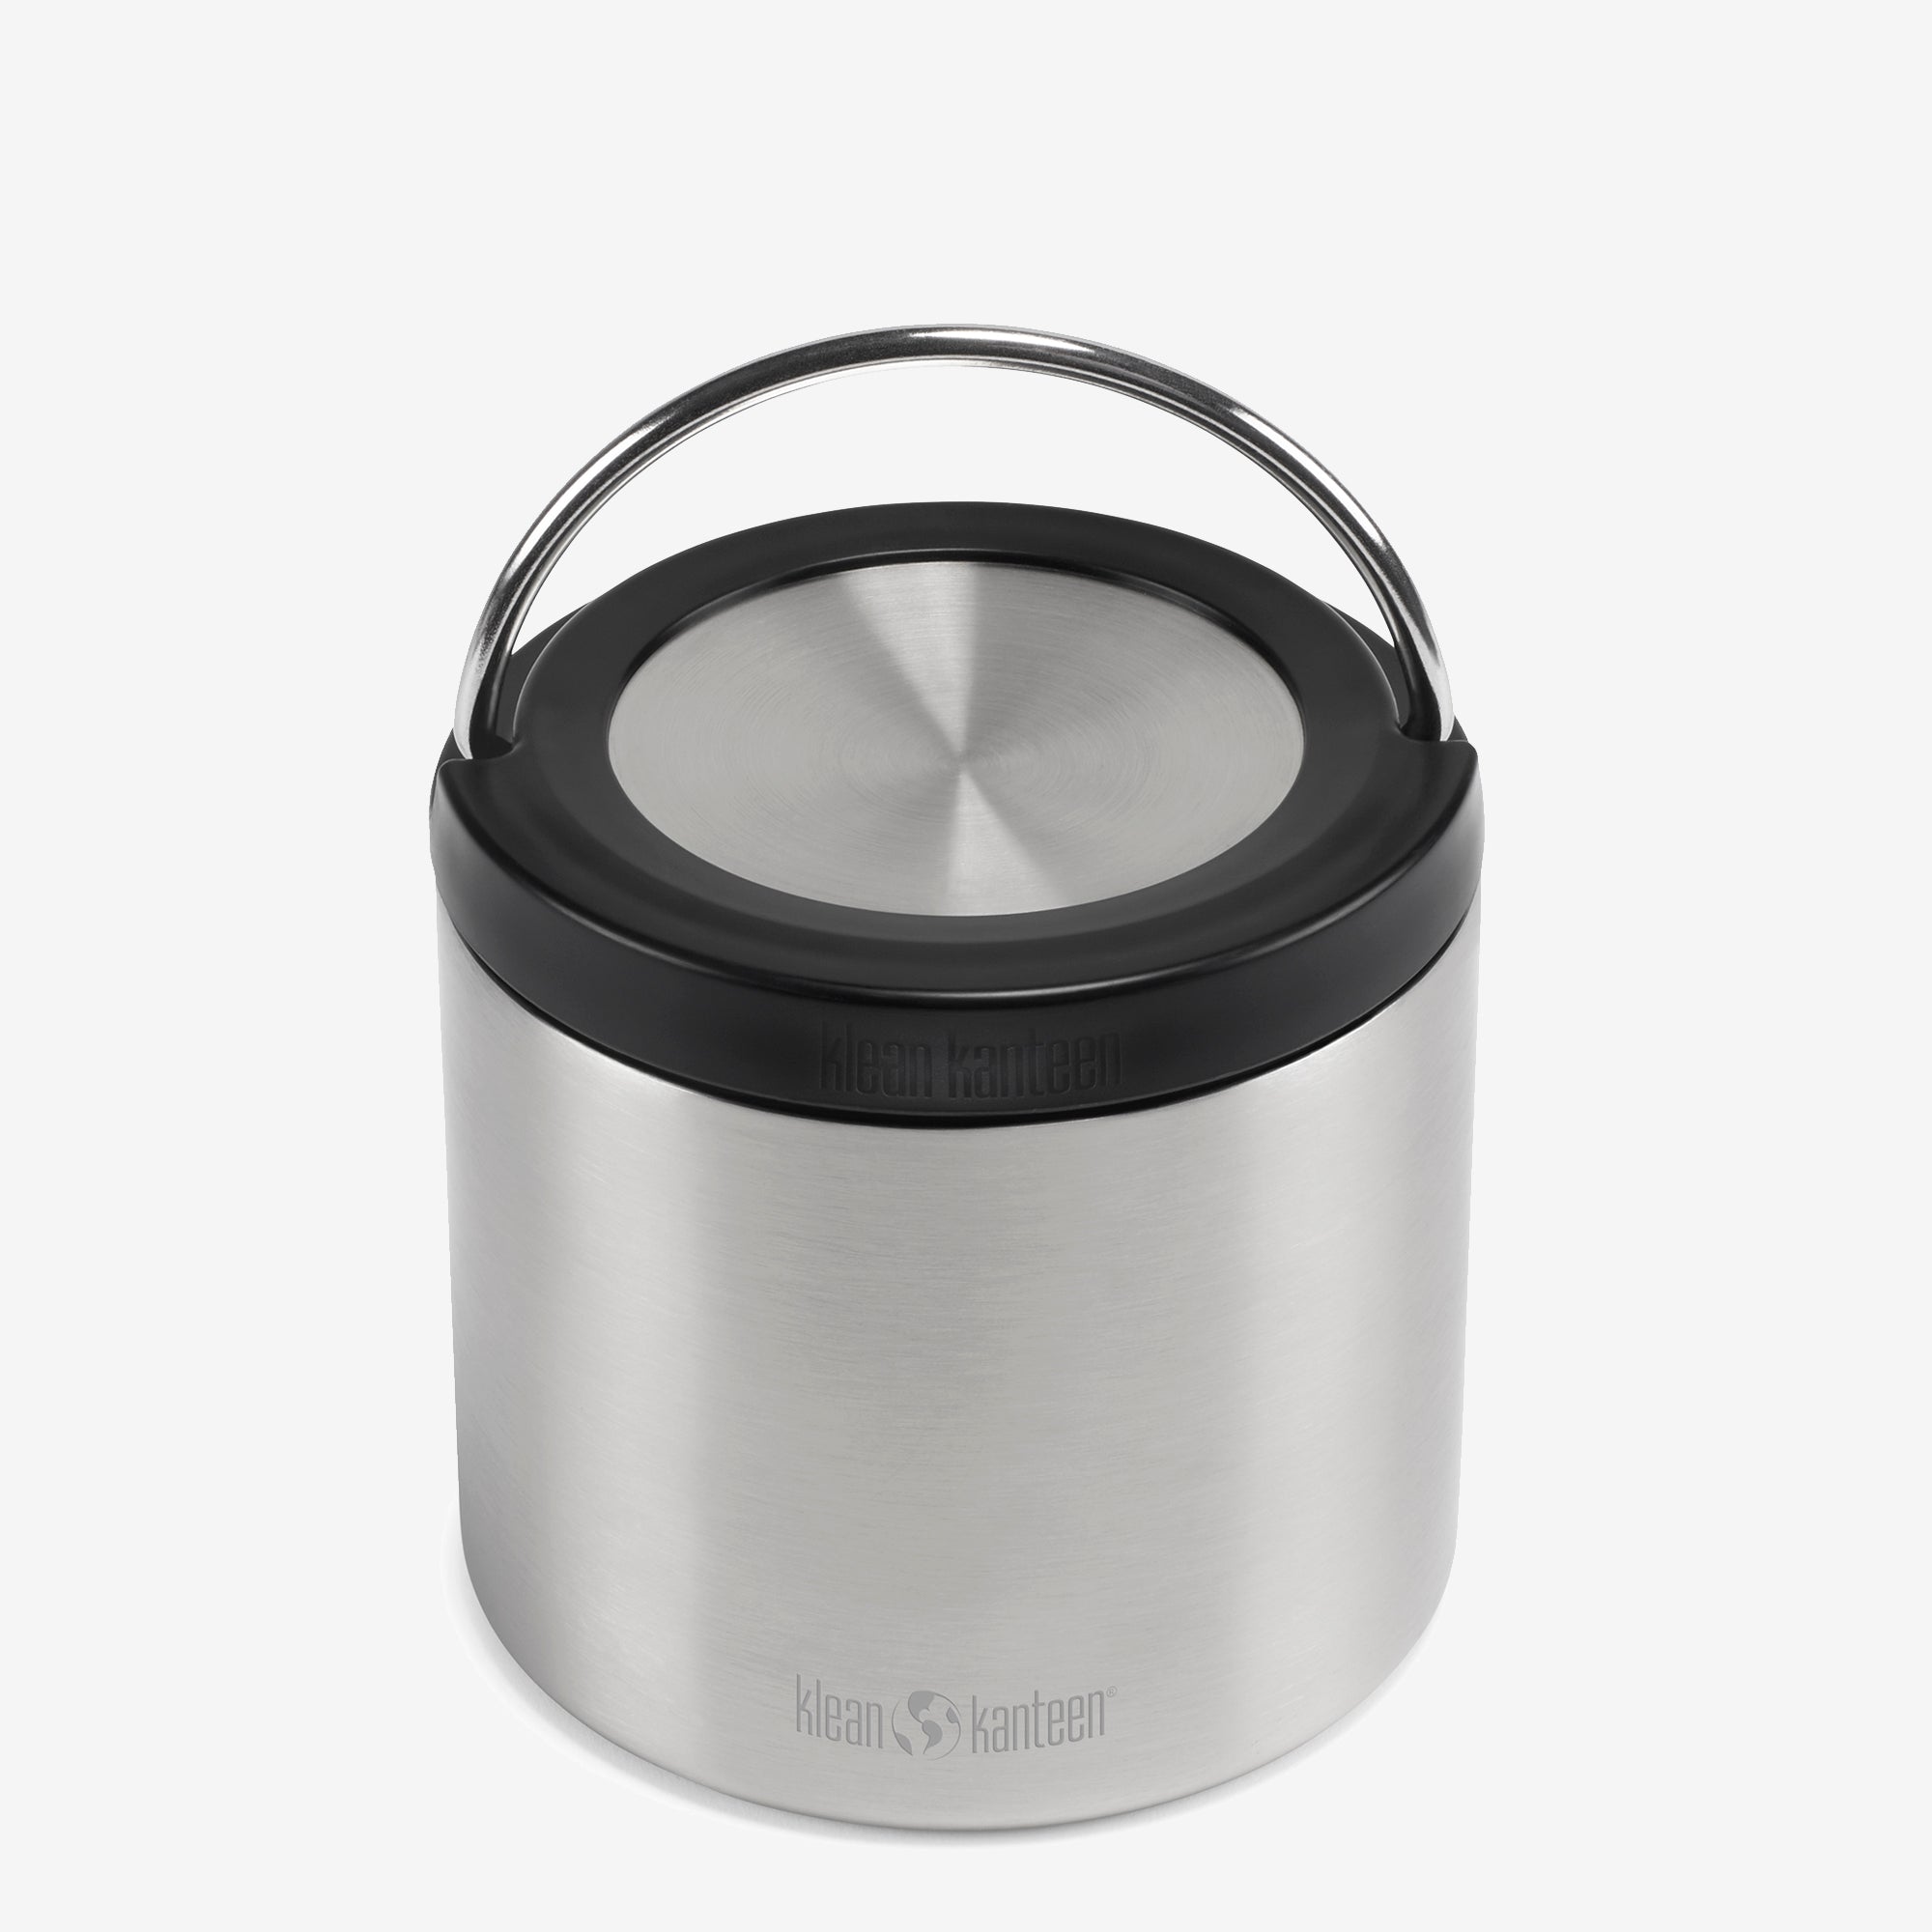 The Thermos 16 oz. Stainless Steel, Vacuum Food Jar